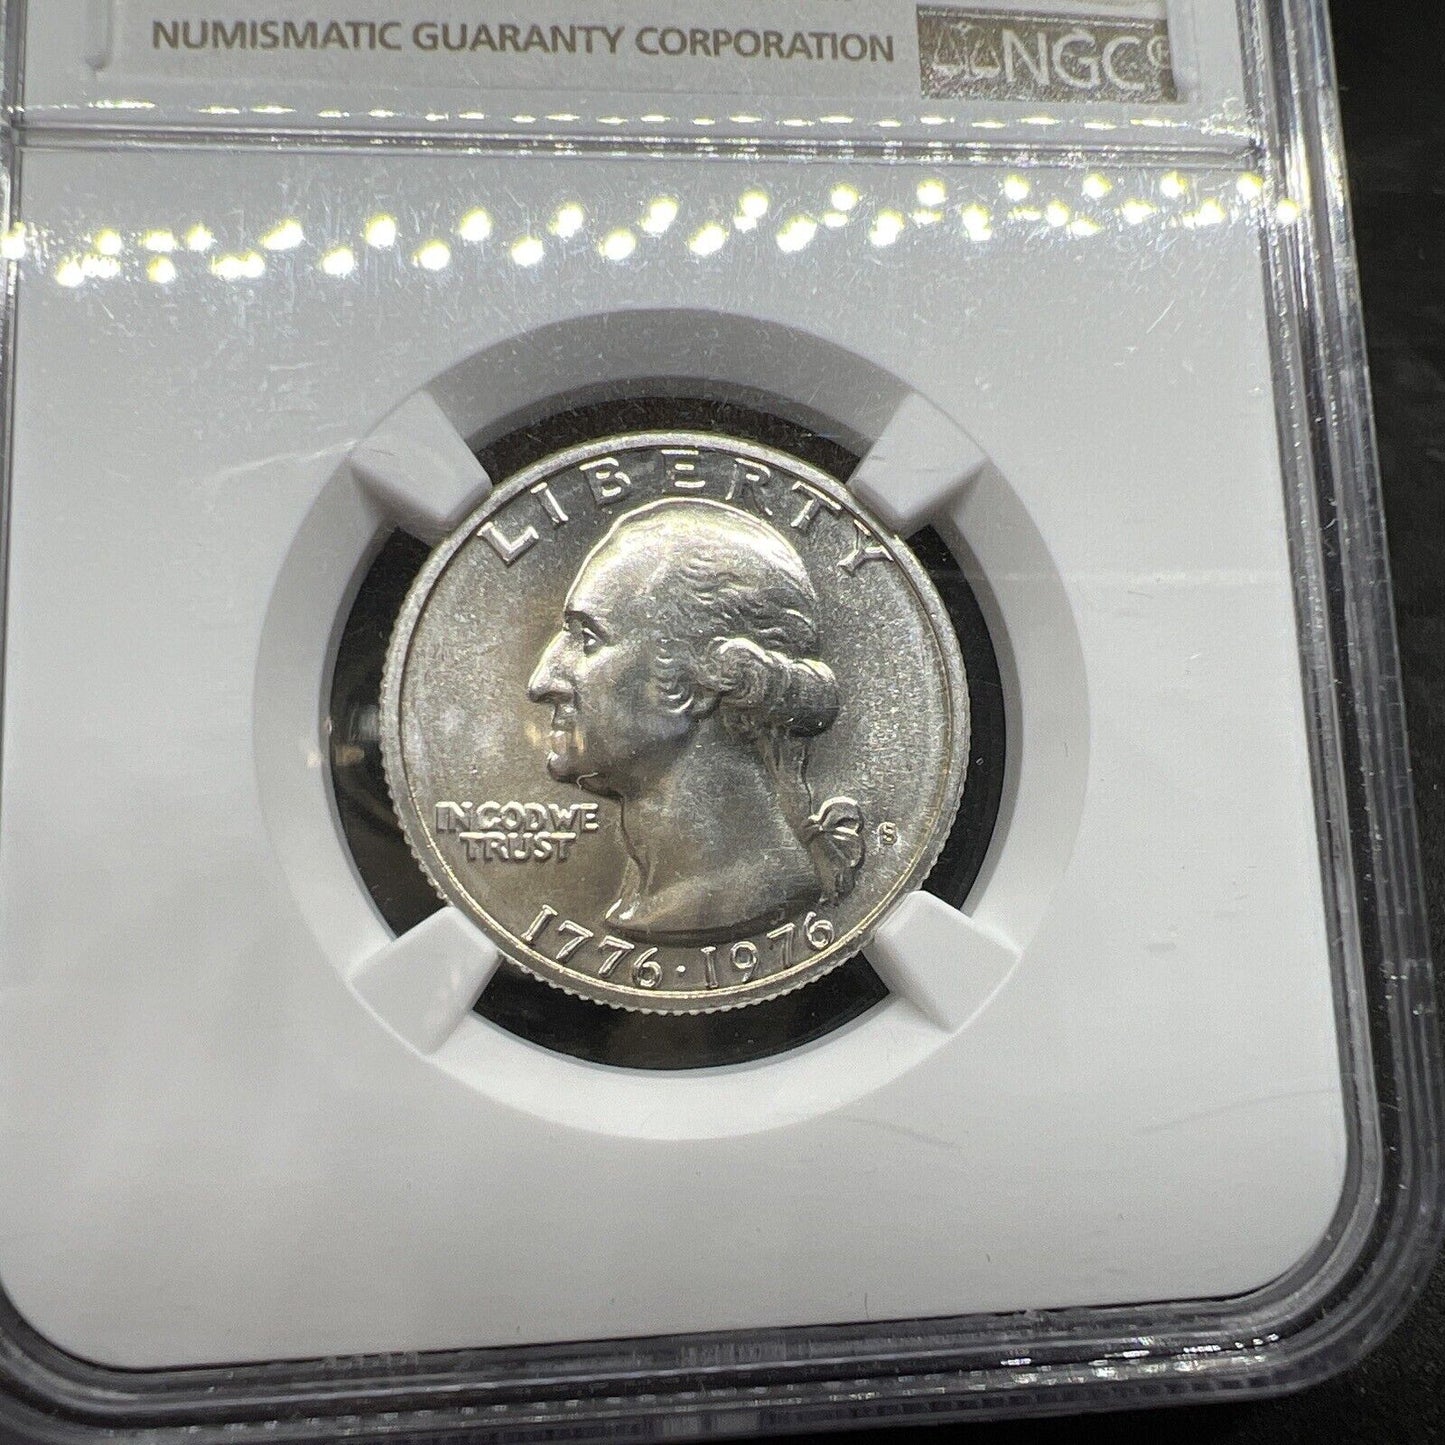 1976 S 25c Washington 40% Silver Quarter MS67 NGC Bicentennial GEM BU